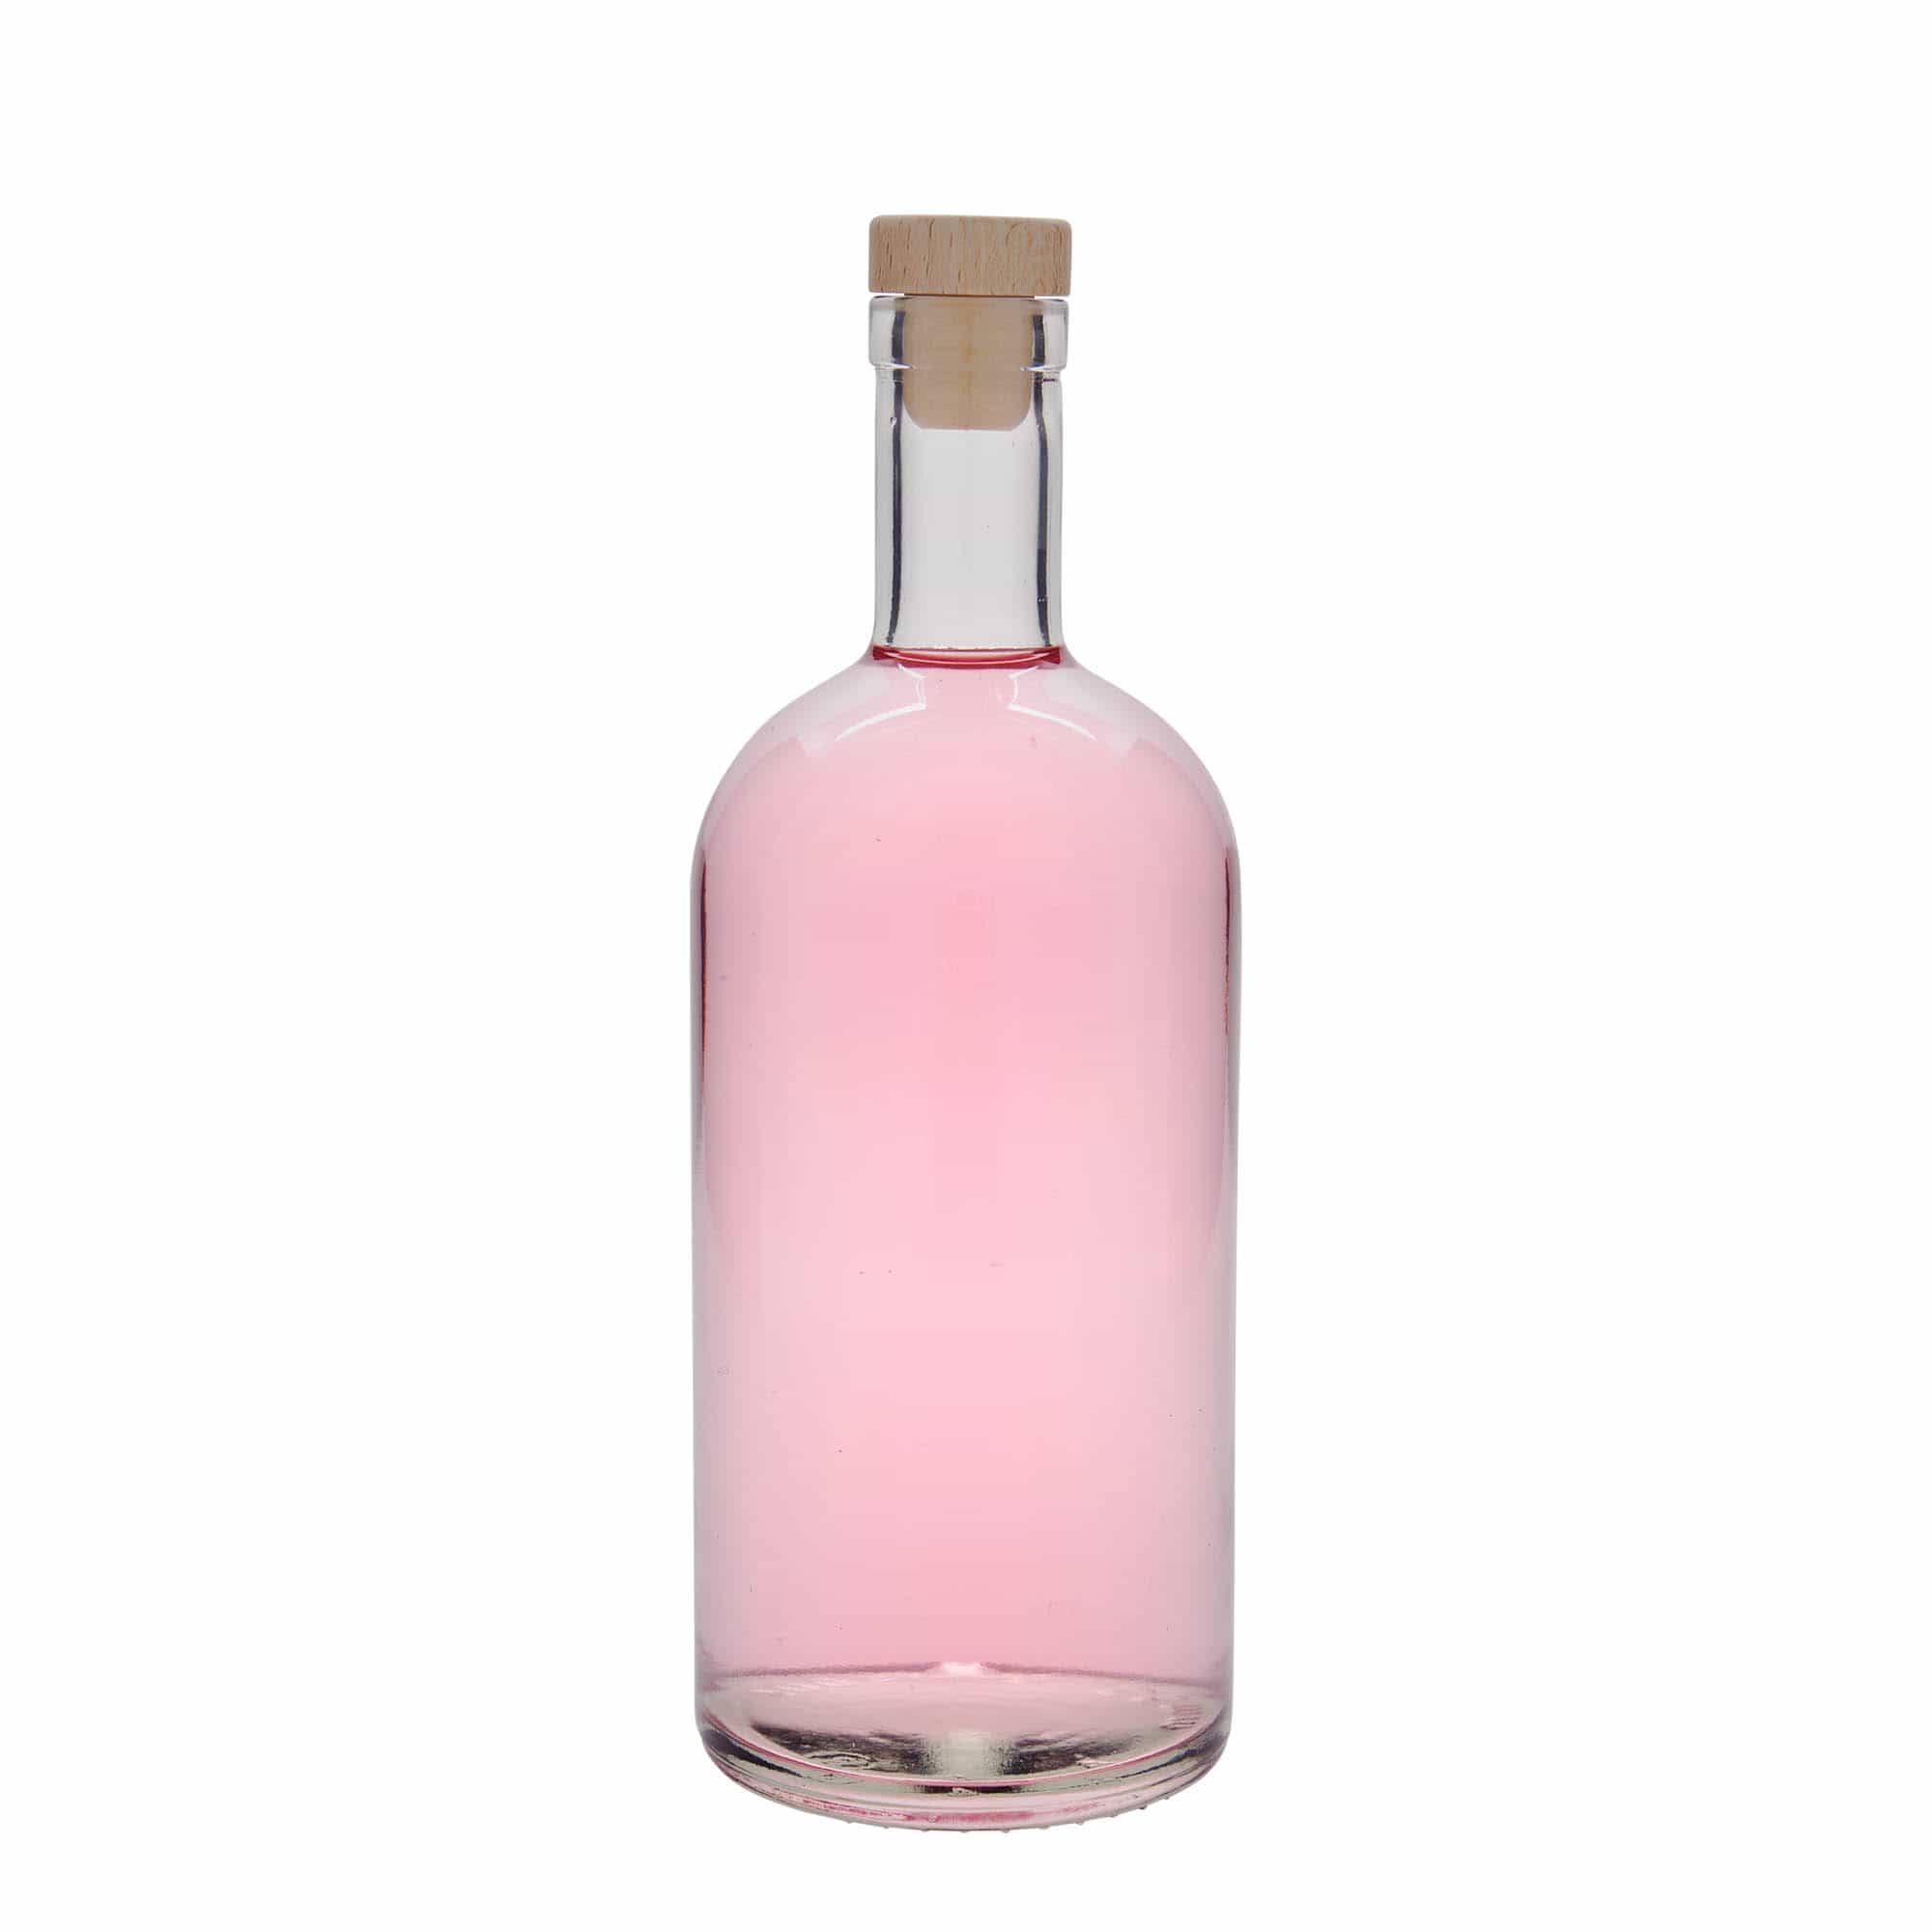 1000 ml glass bottle 'Gerardino', closure: cork